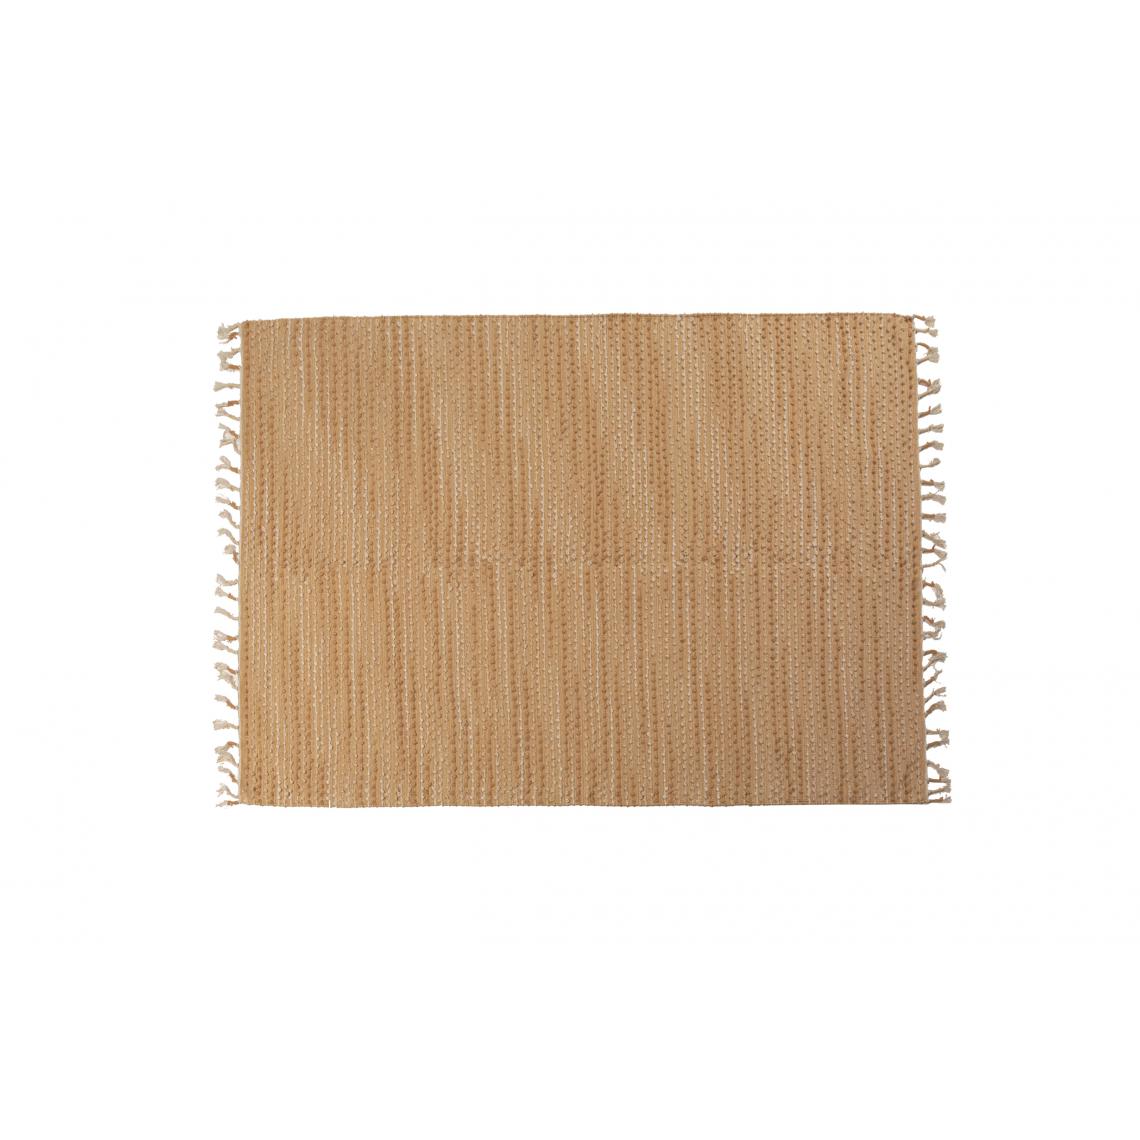 Alter - Tapis moderne Atlanta, style kilim, 100% coton, ivoire, 150x80cm - Tapis